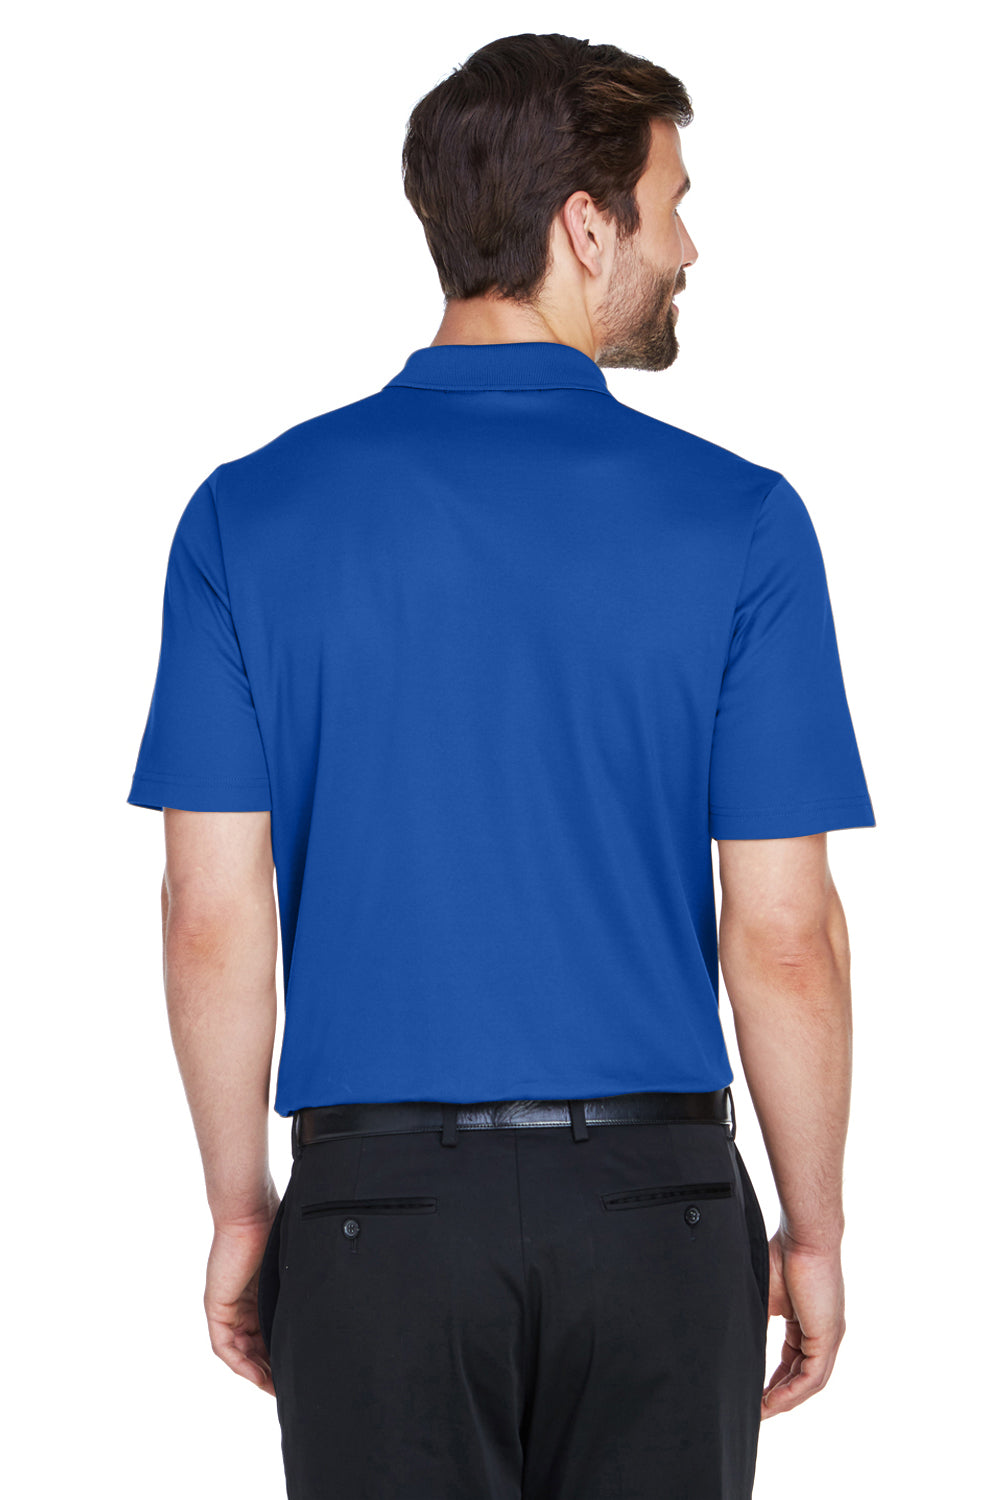 Devon & Jones DG20 Mens CrownLux Performance Moisture Wicking Short Sleeve Polo Shirt Royal Blue Back